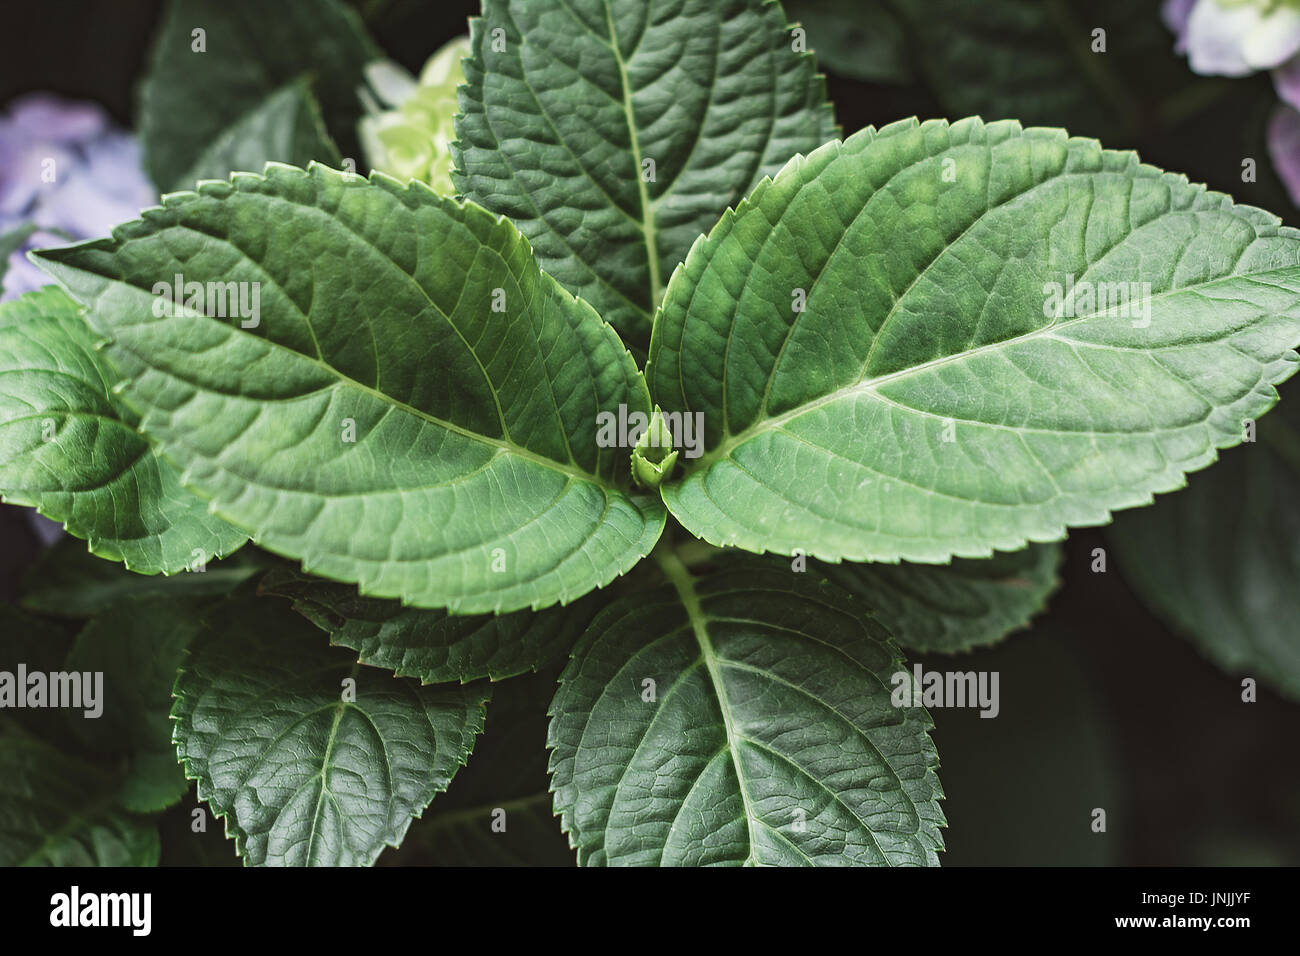 Green leaves on hydragenea flower bush. Closeup view Stock Photo